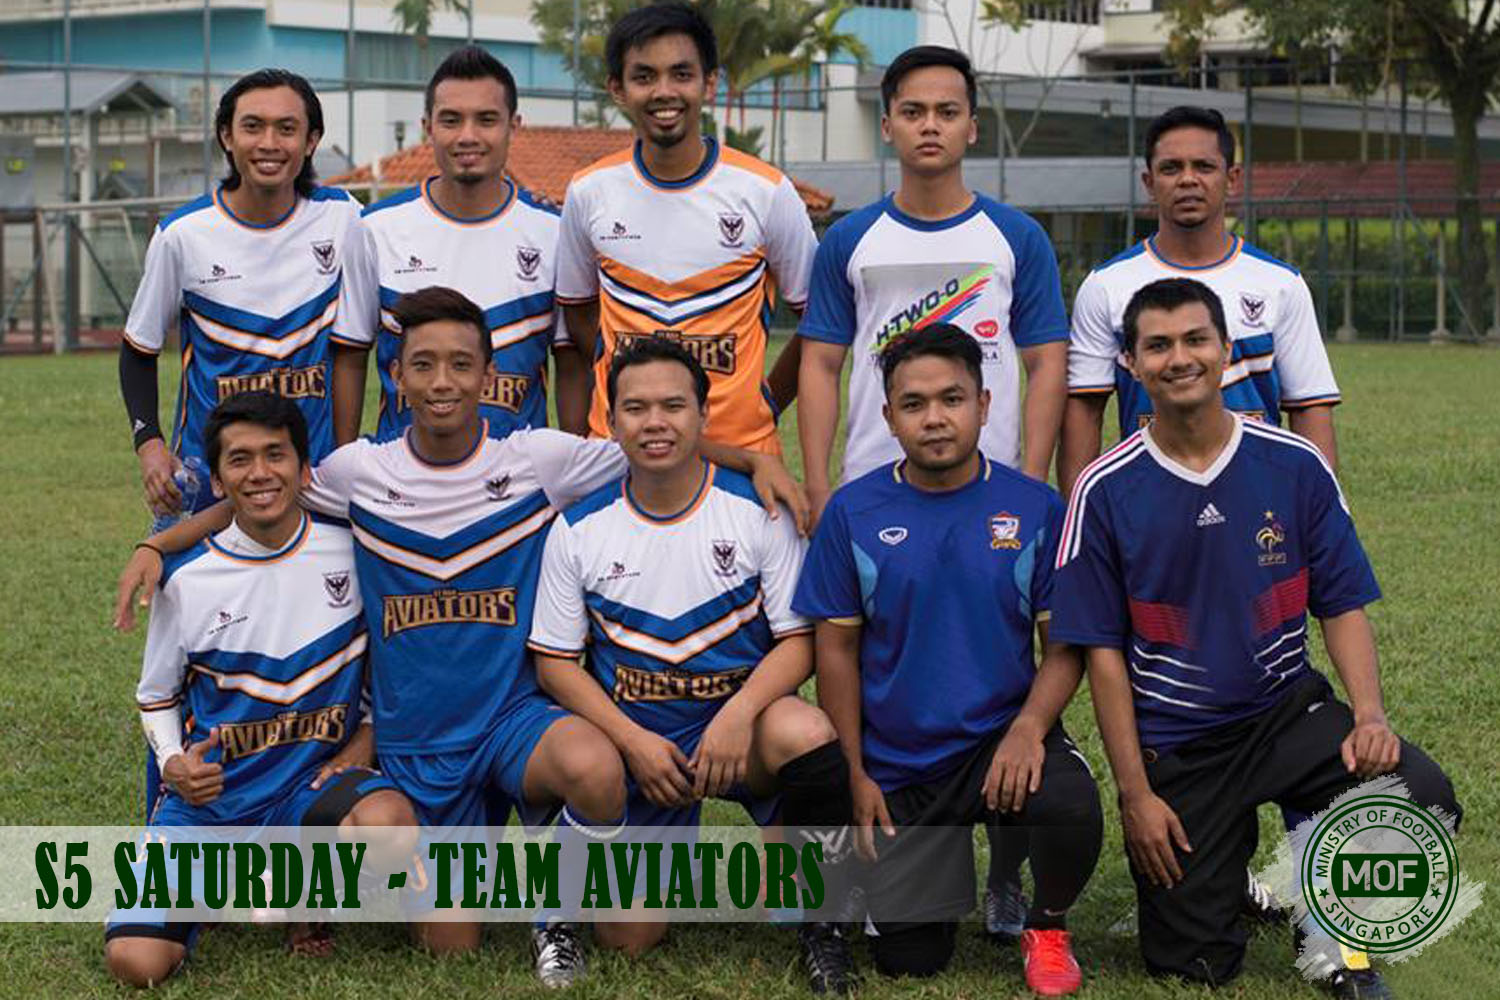 Team Aviators